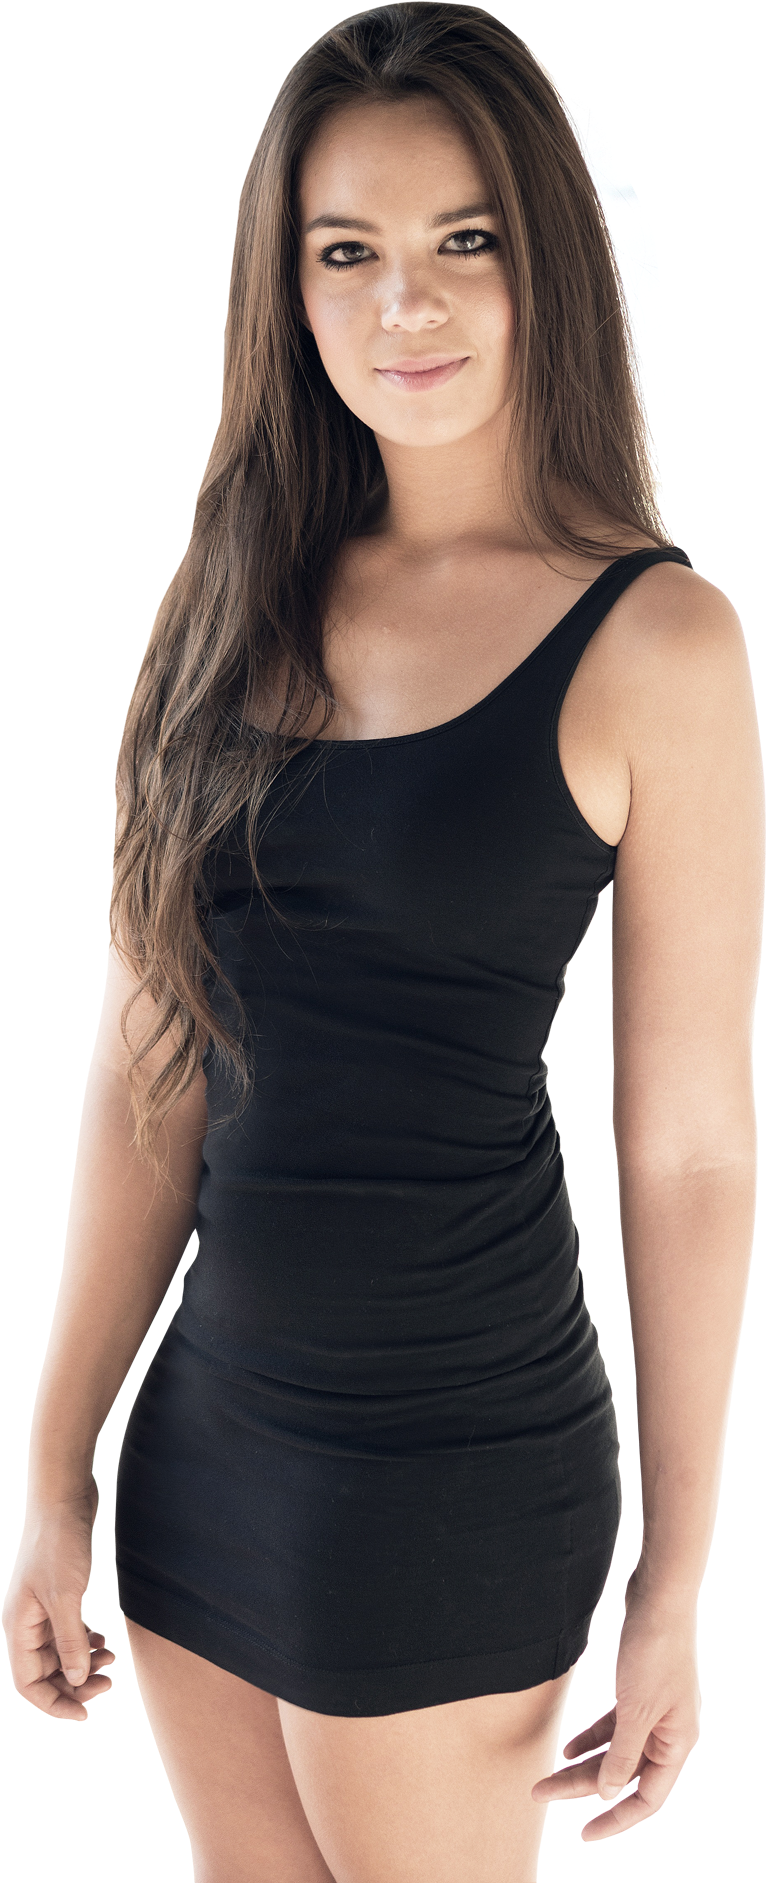 Confident Womanin Black Dress PNG image